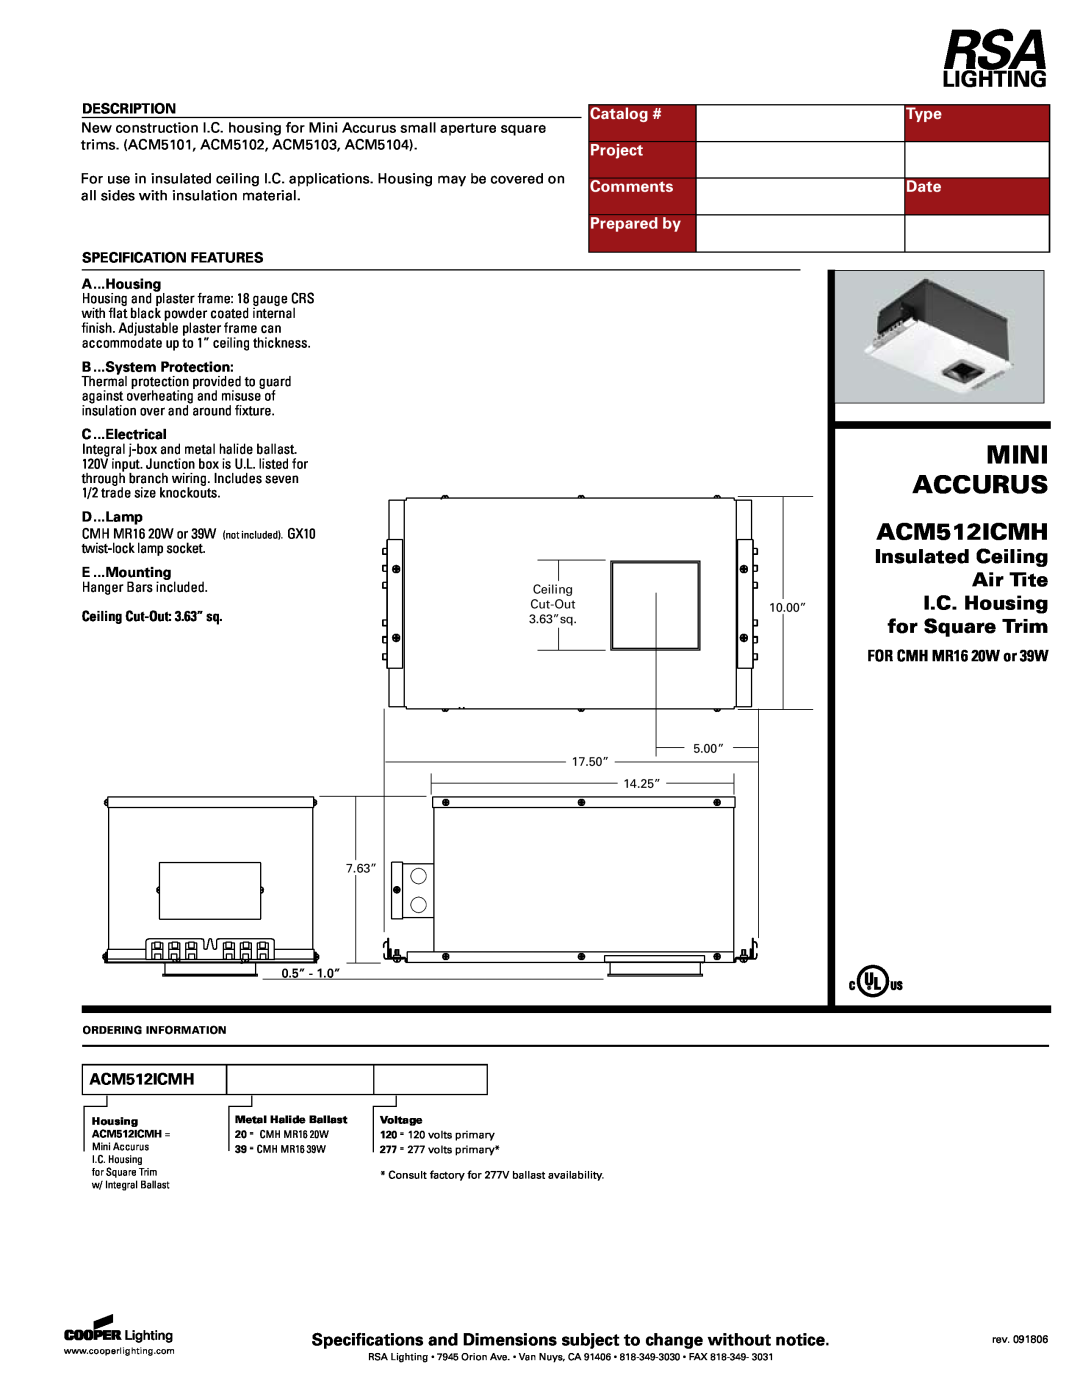 Cooper Lighting ACM512ICMH specifications Mini, Accurus, Insulated Ceiling, Air Tite, I.C. Housing, for Square Trim, Type 